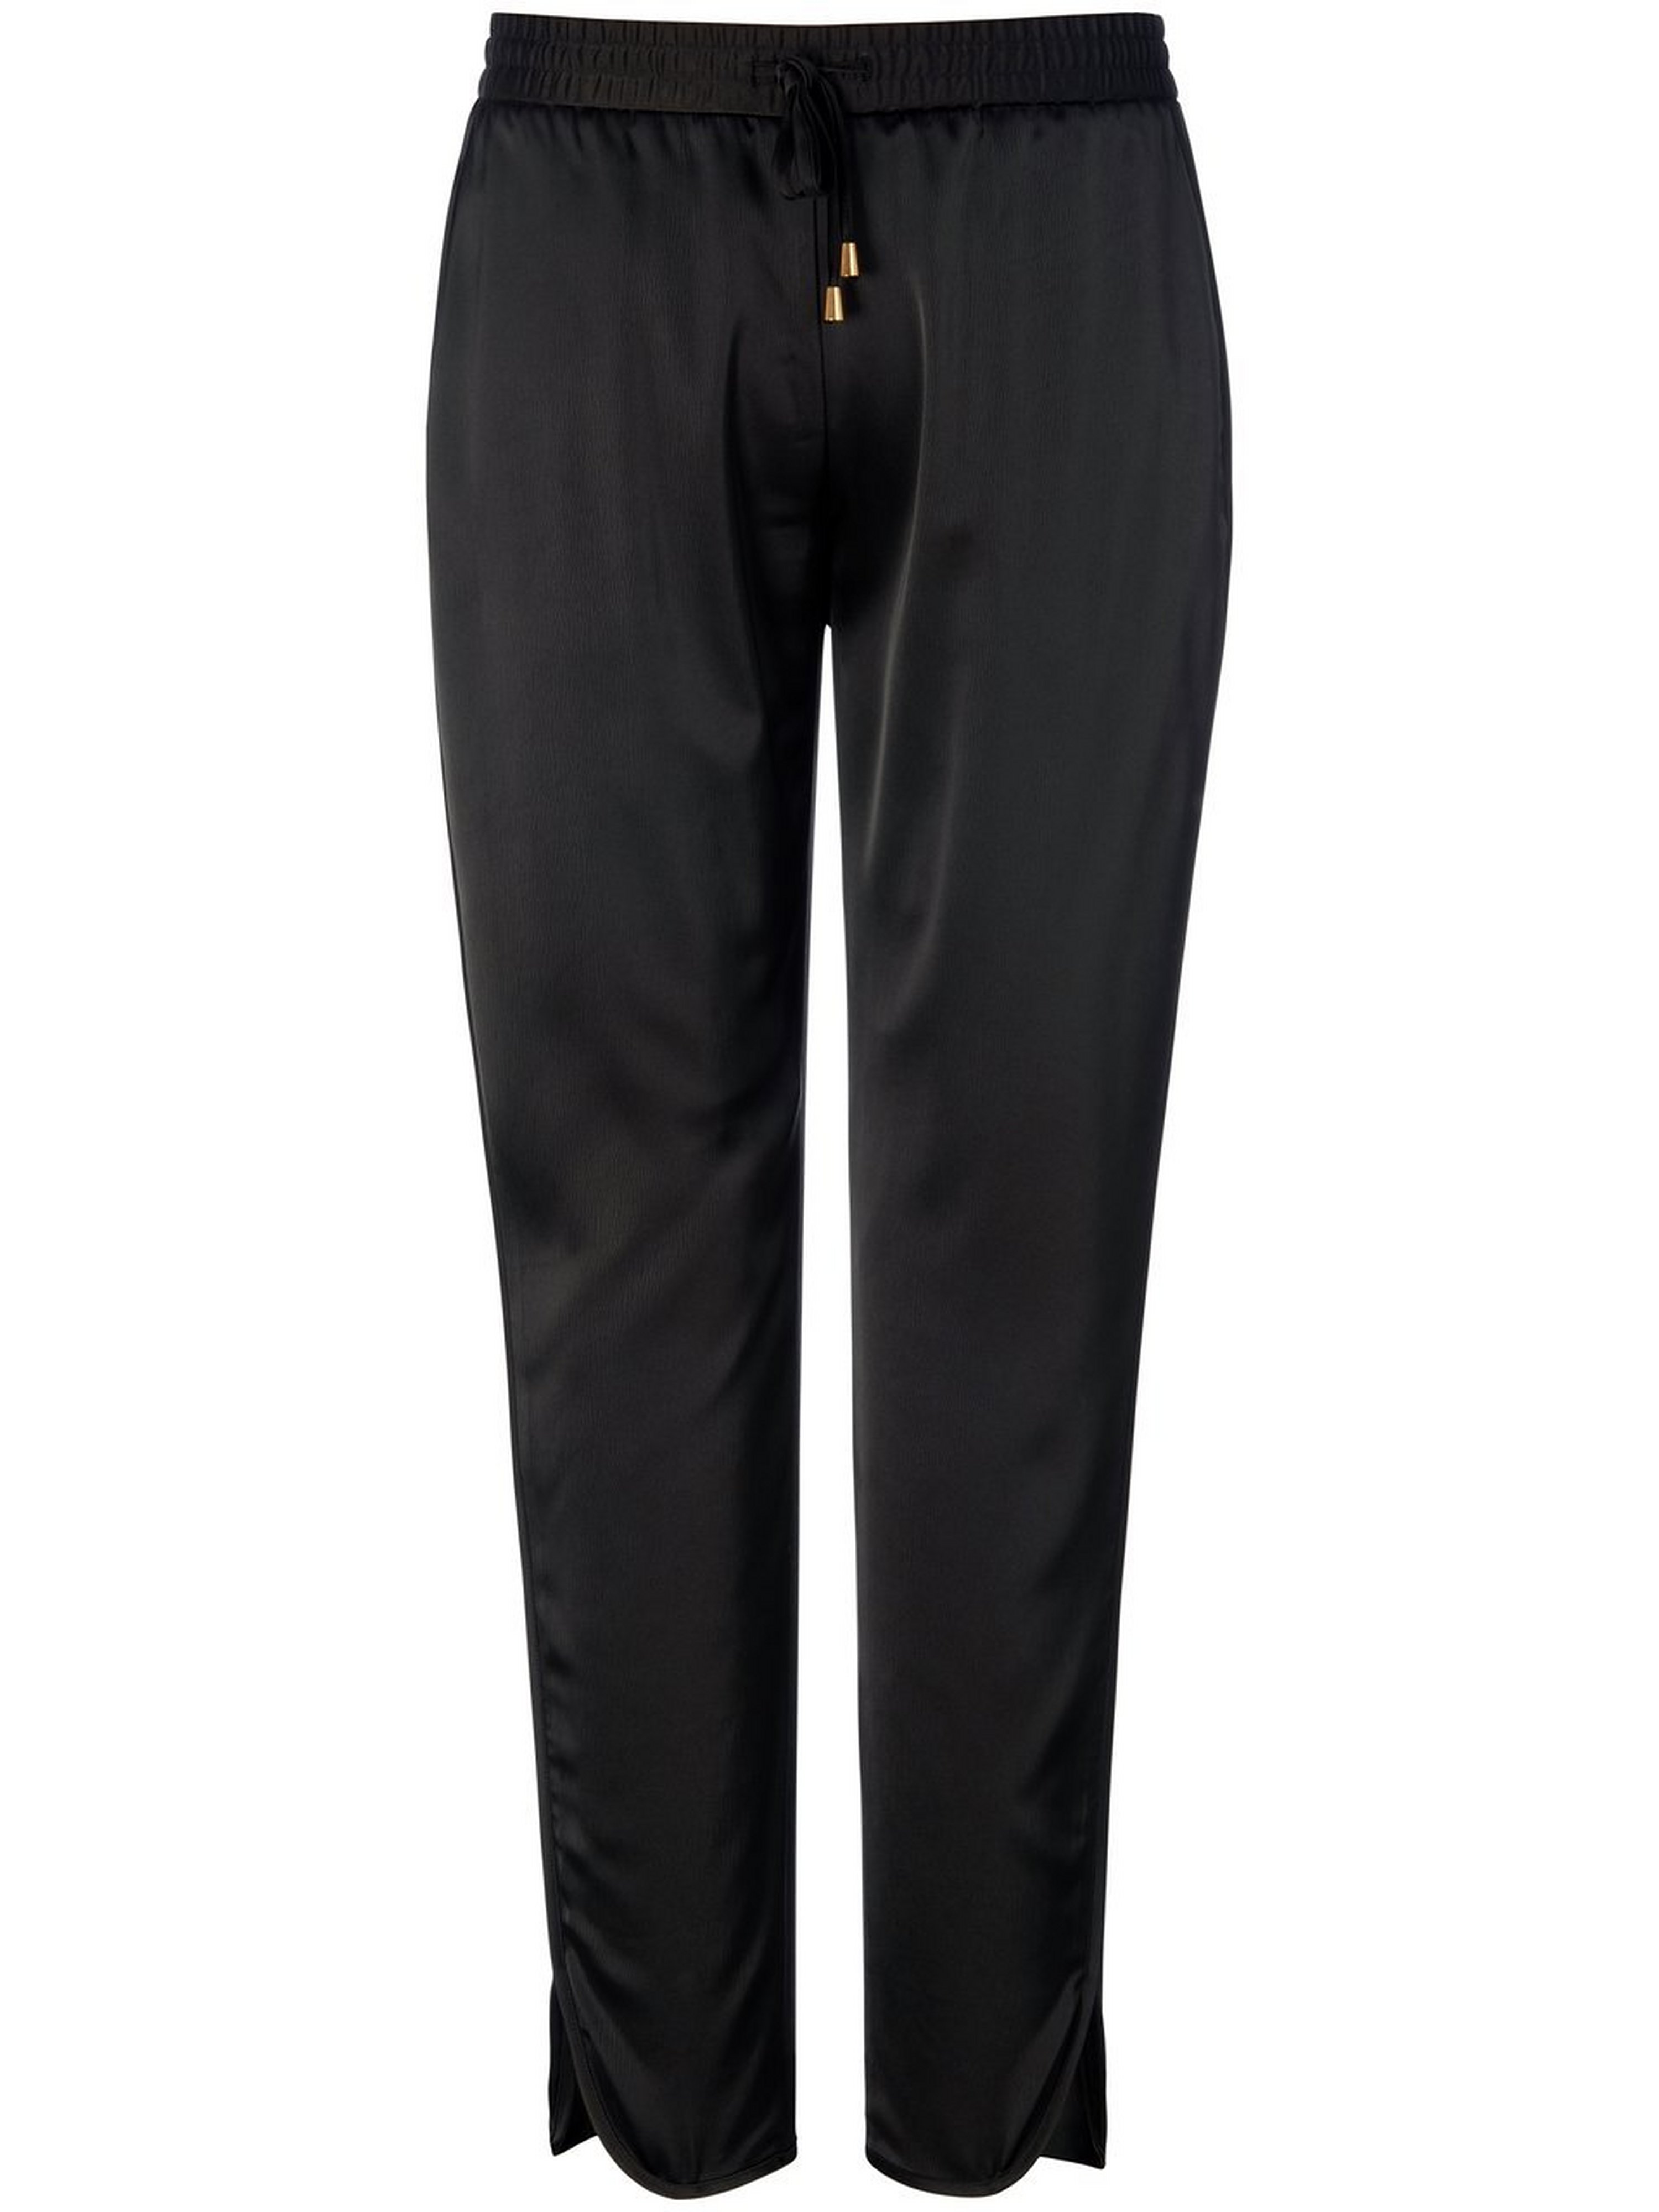 Le pantalon 100% polyester  Emilia Lay noir taille 56